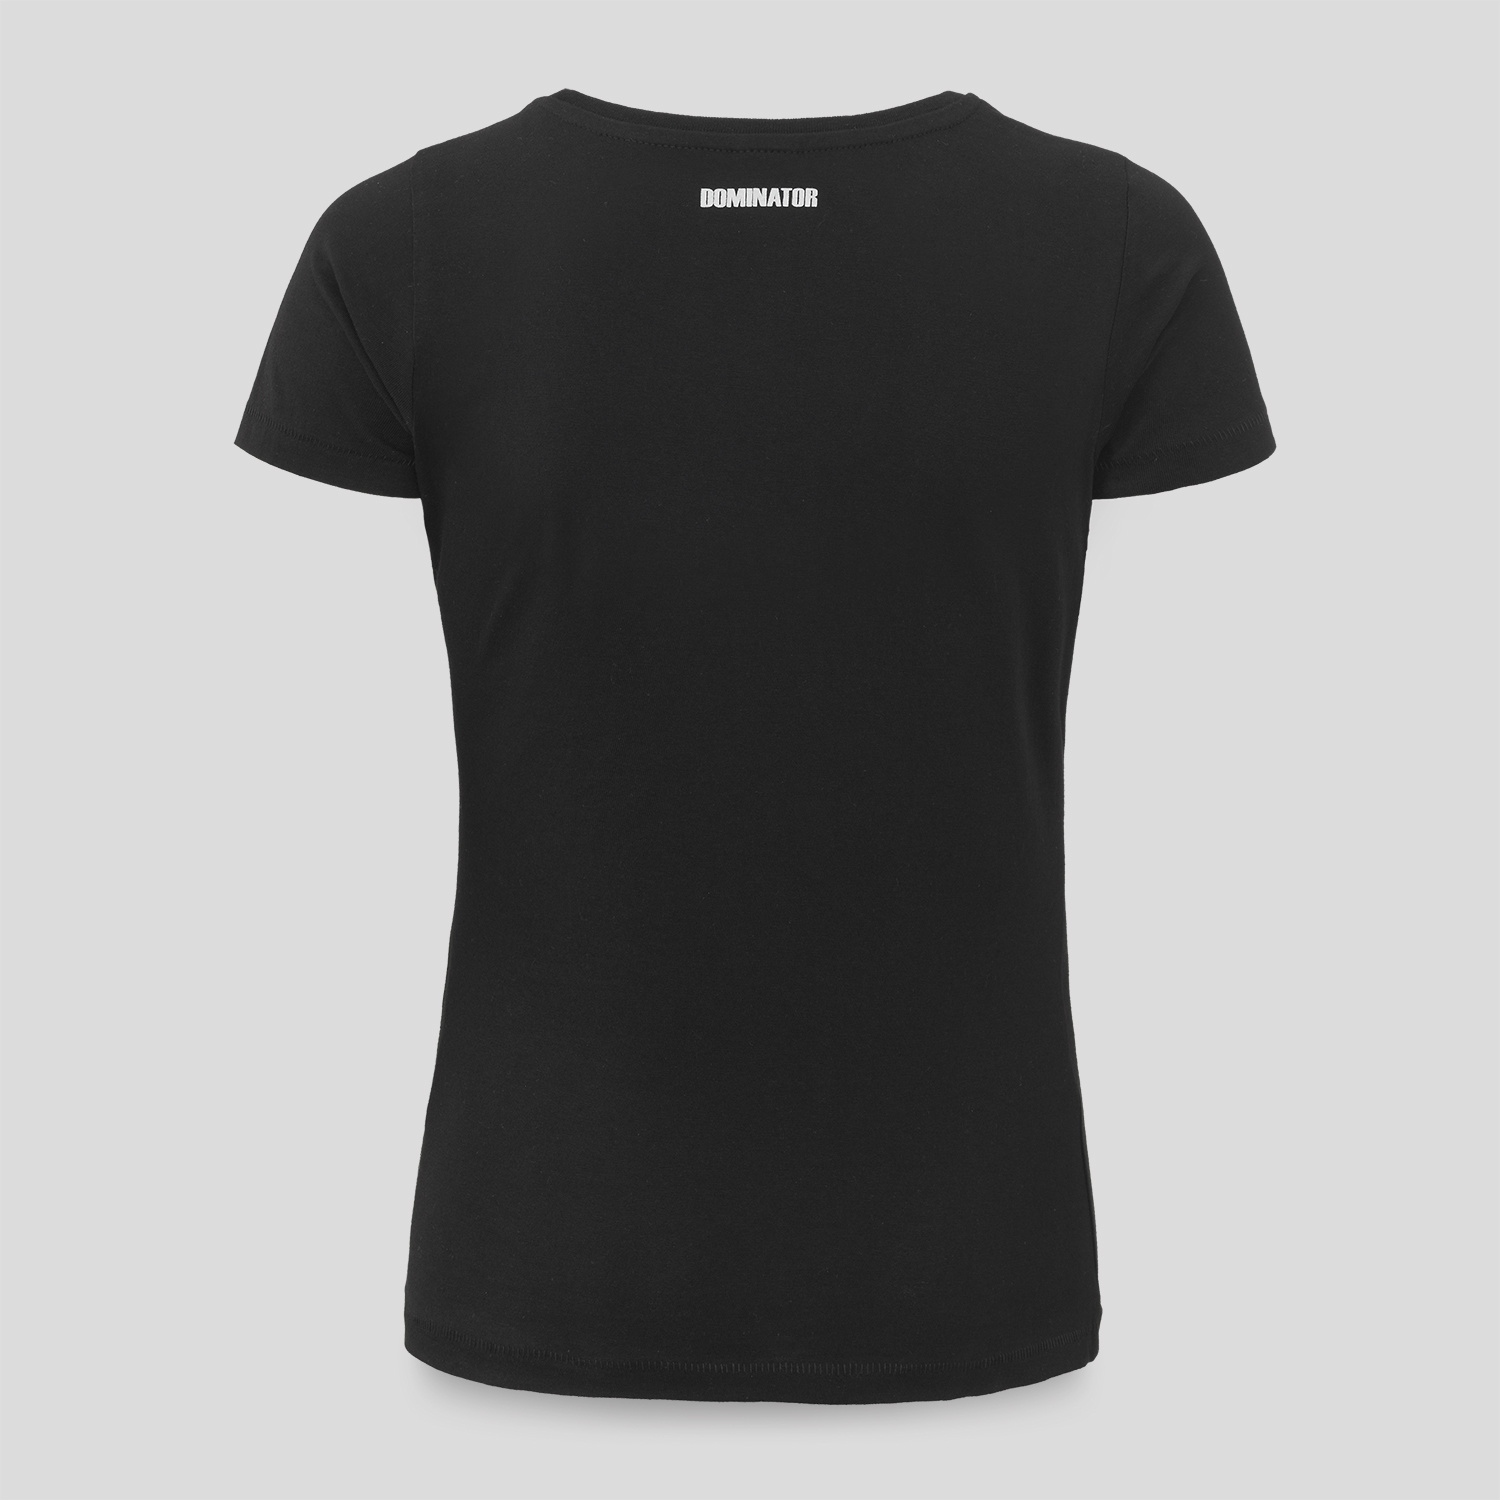 Dominator t-shirt black/white women - Q-dance